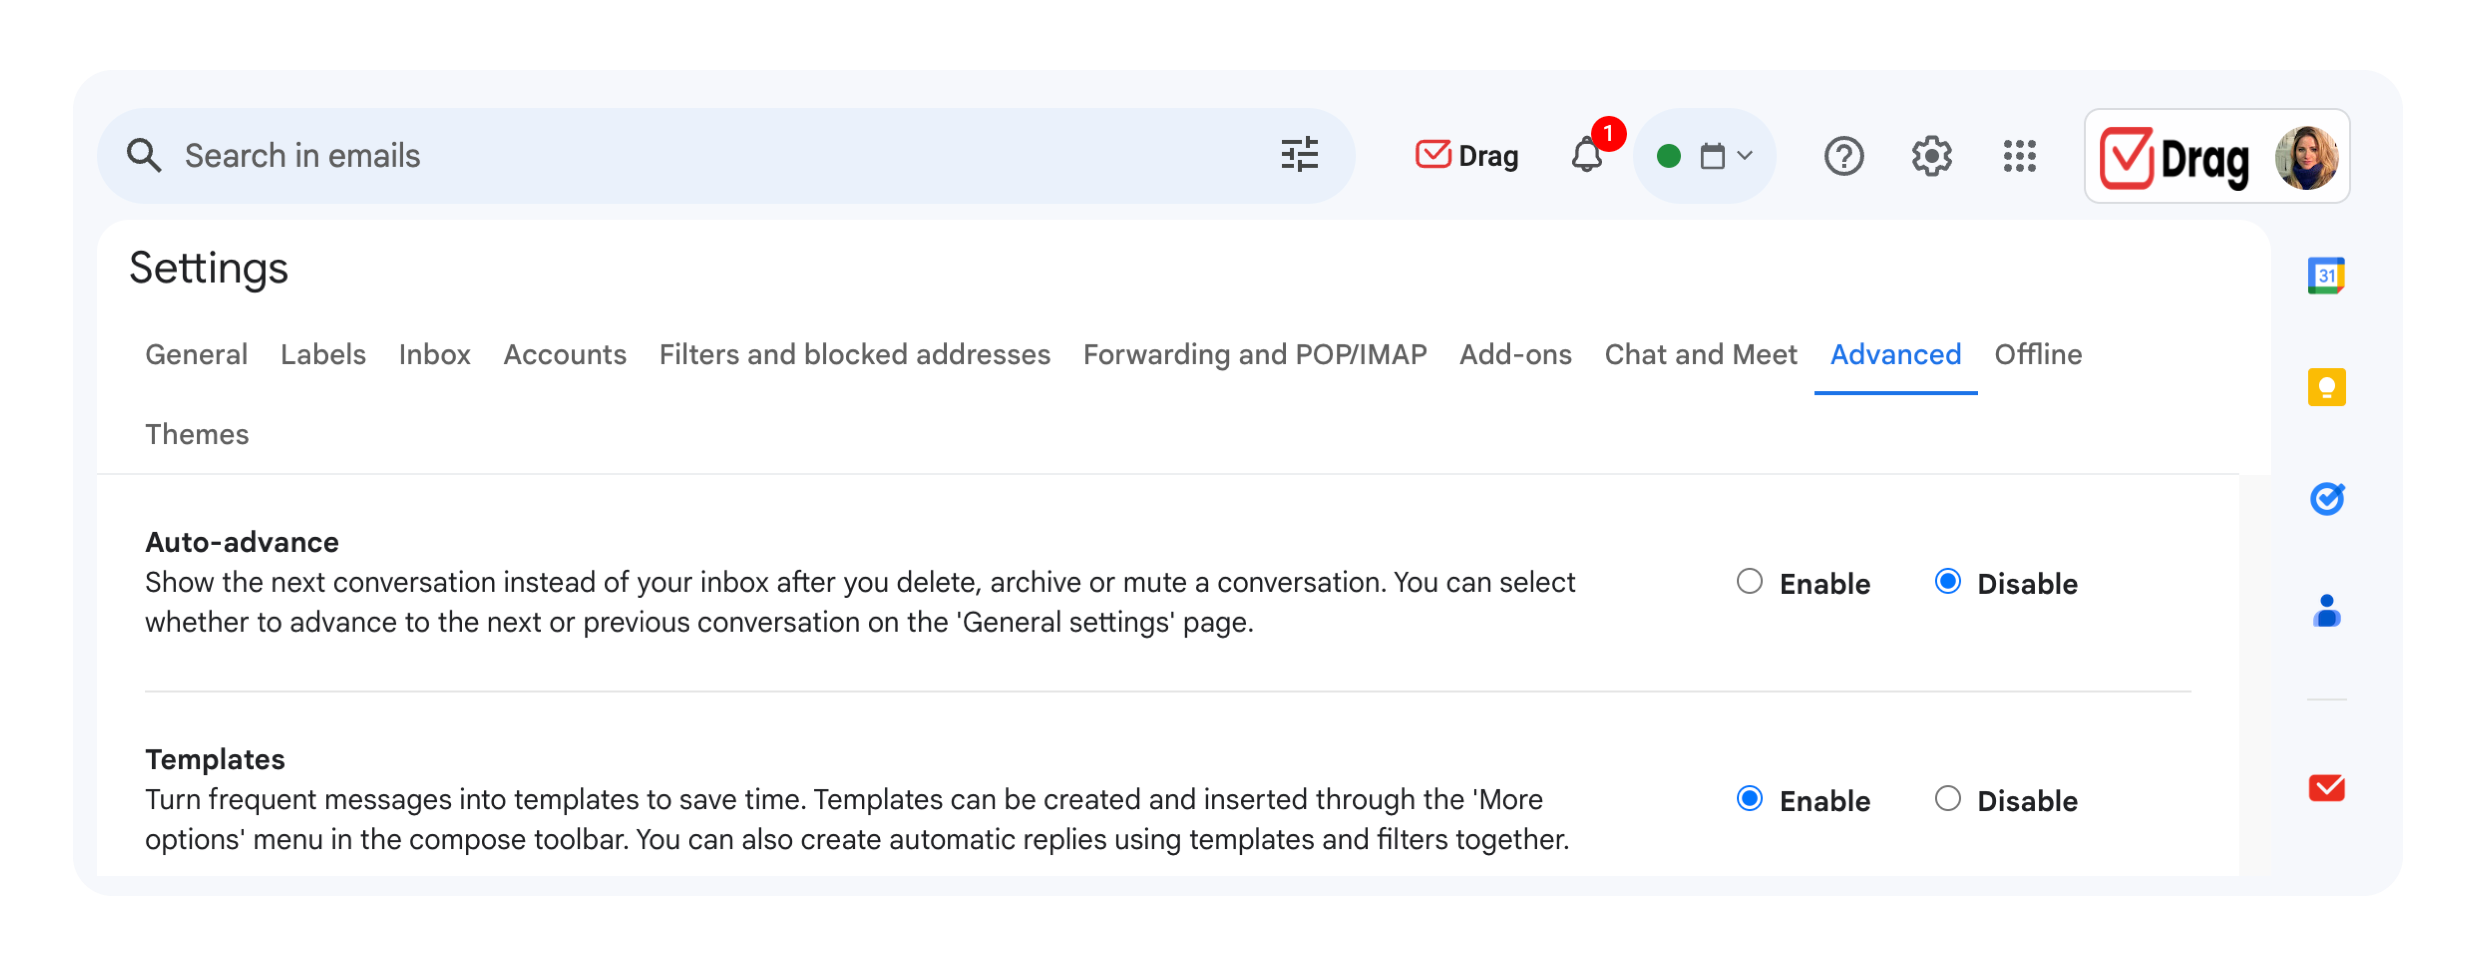 Gmail templates settings